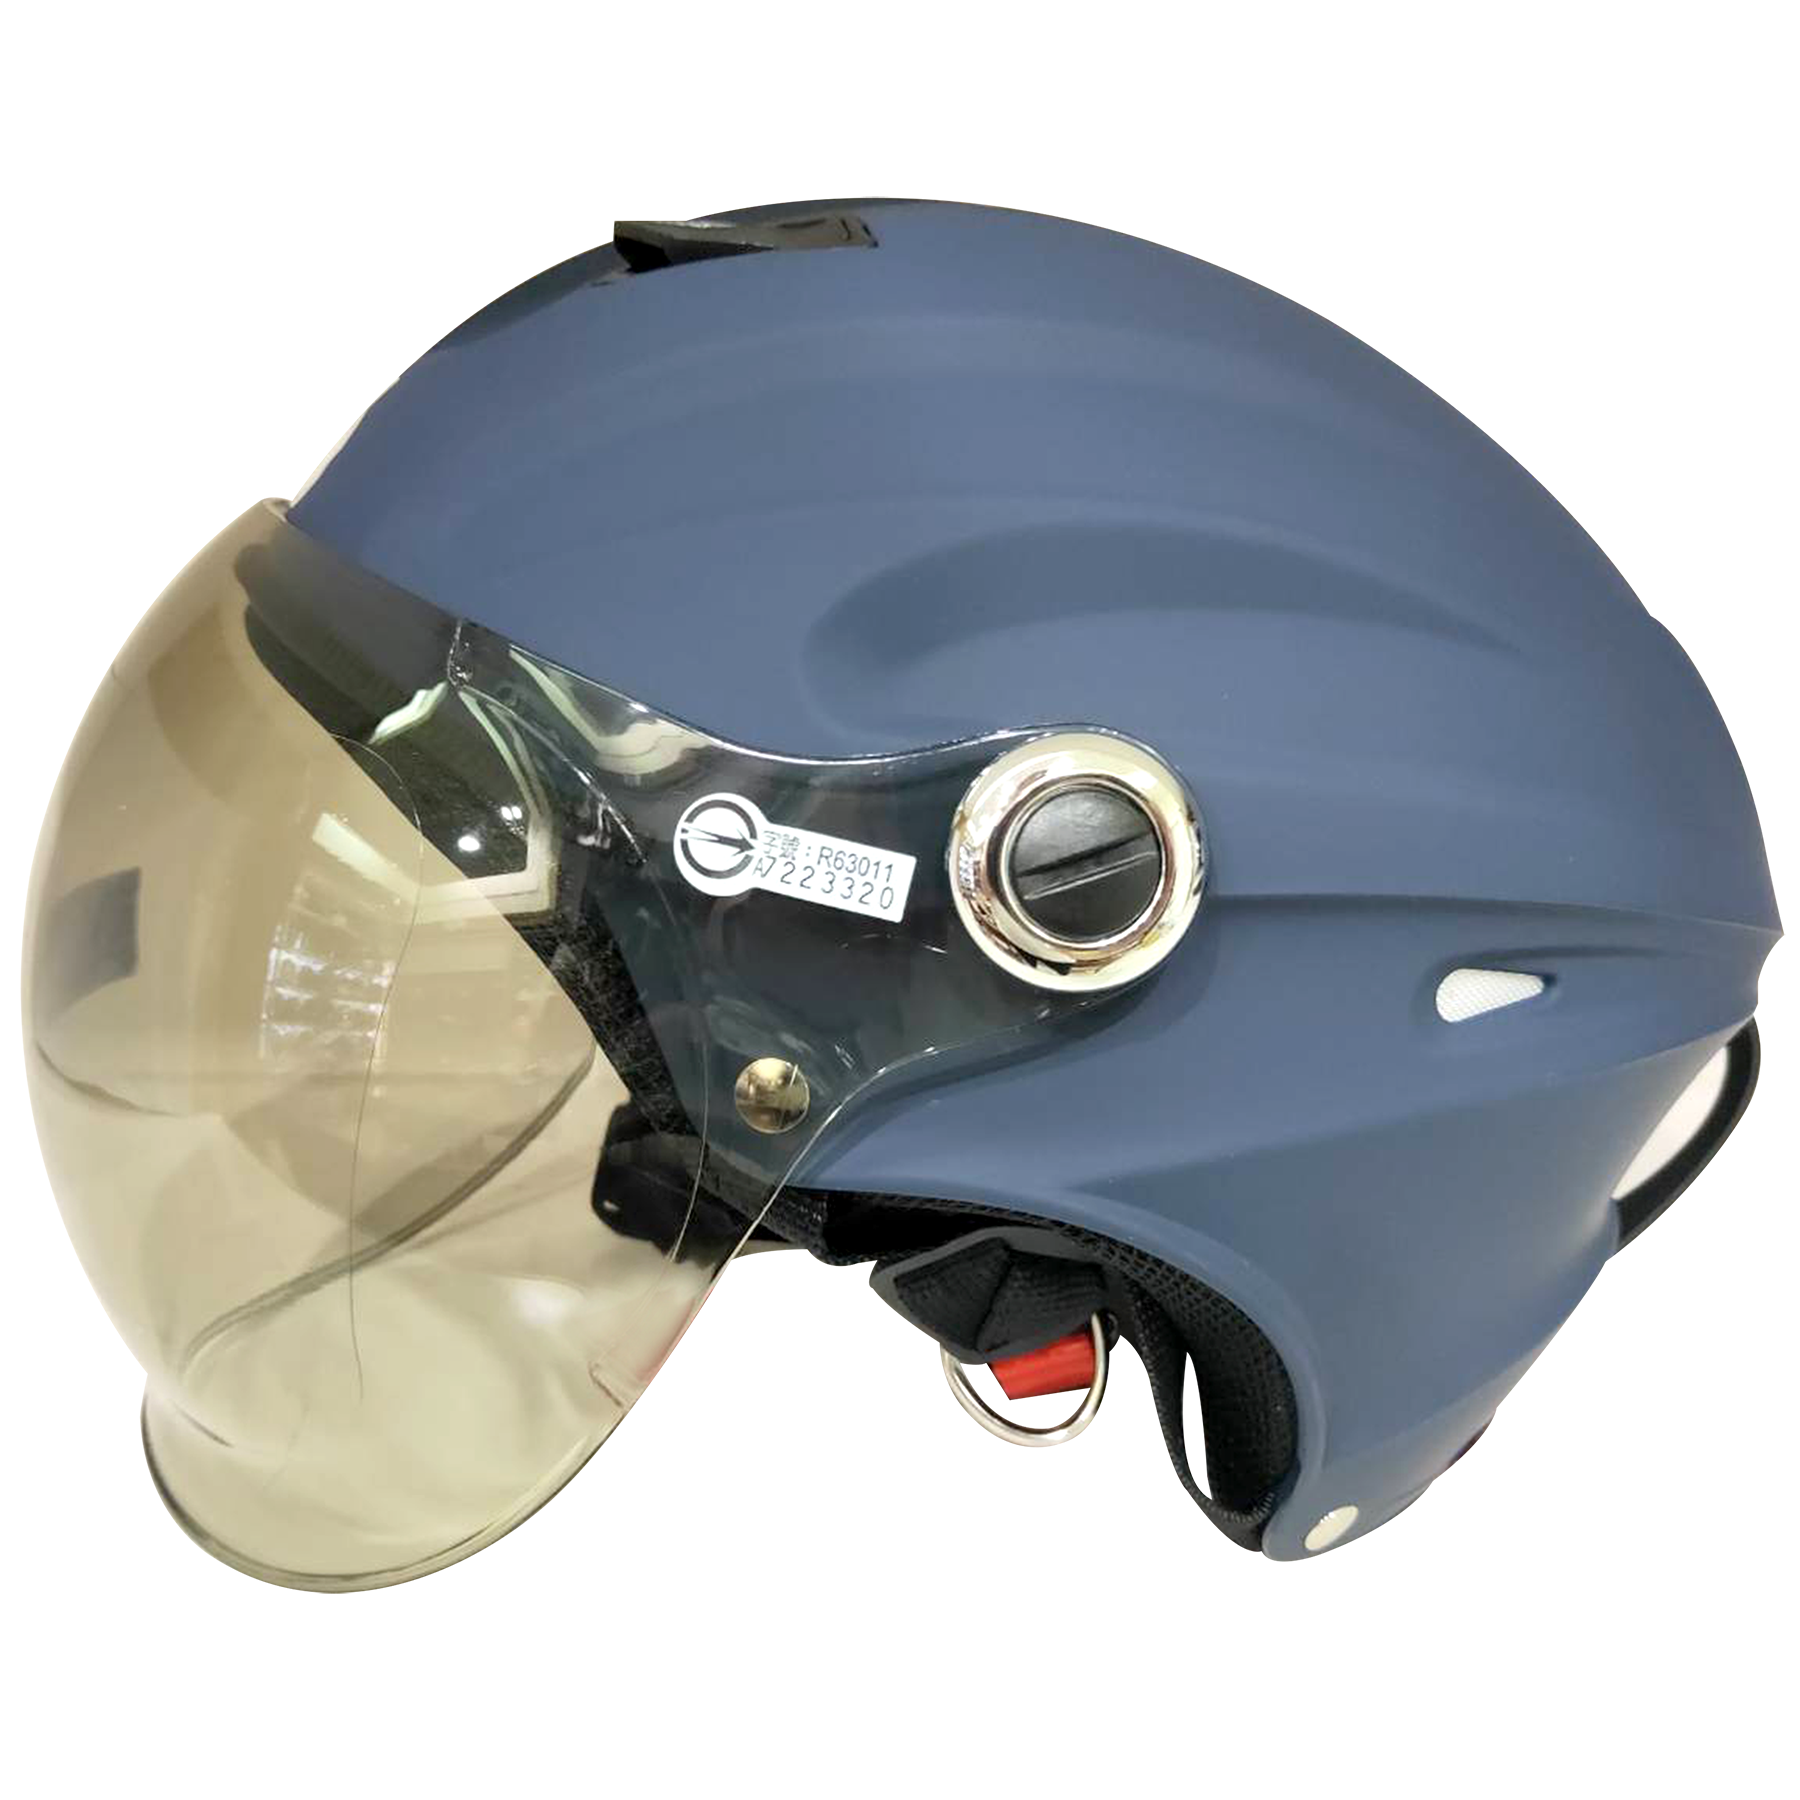 GP6 0401 Helment, 消光藍, large